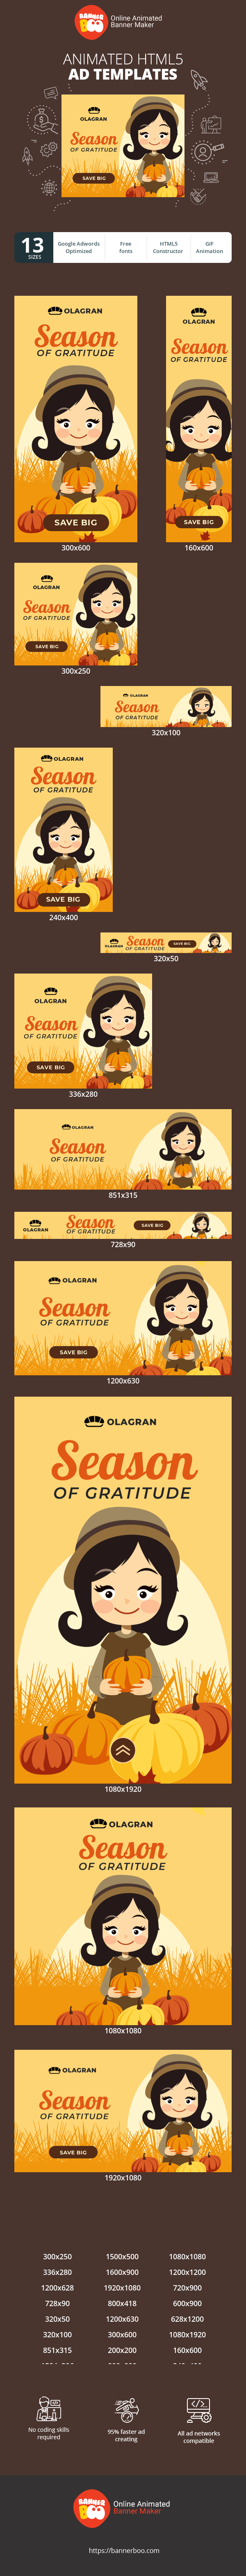 Banner ad template — Season Of Gratitude — Thanksgiving Day